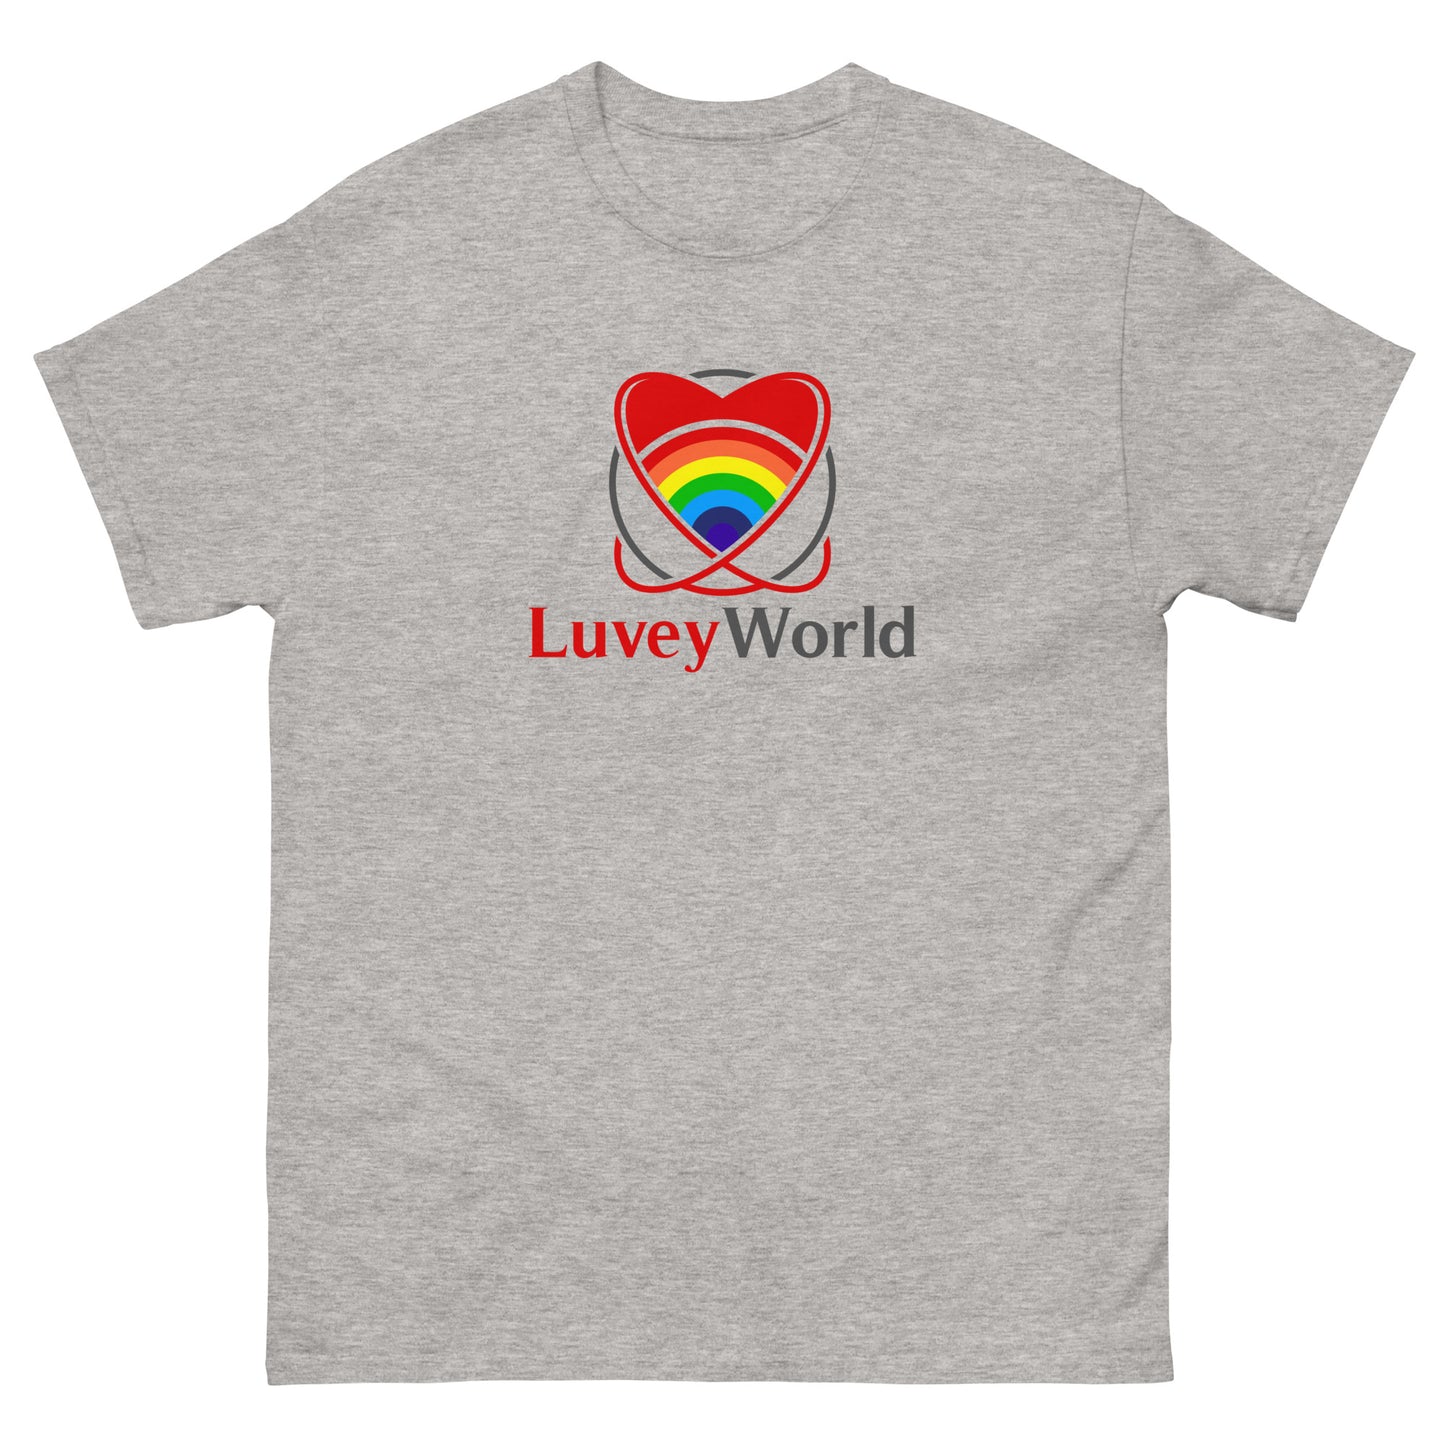 LuveyWorld classic t-shirt